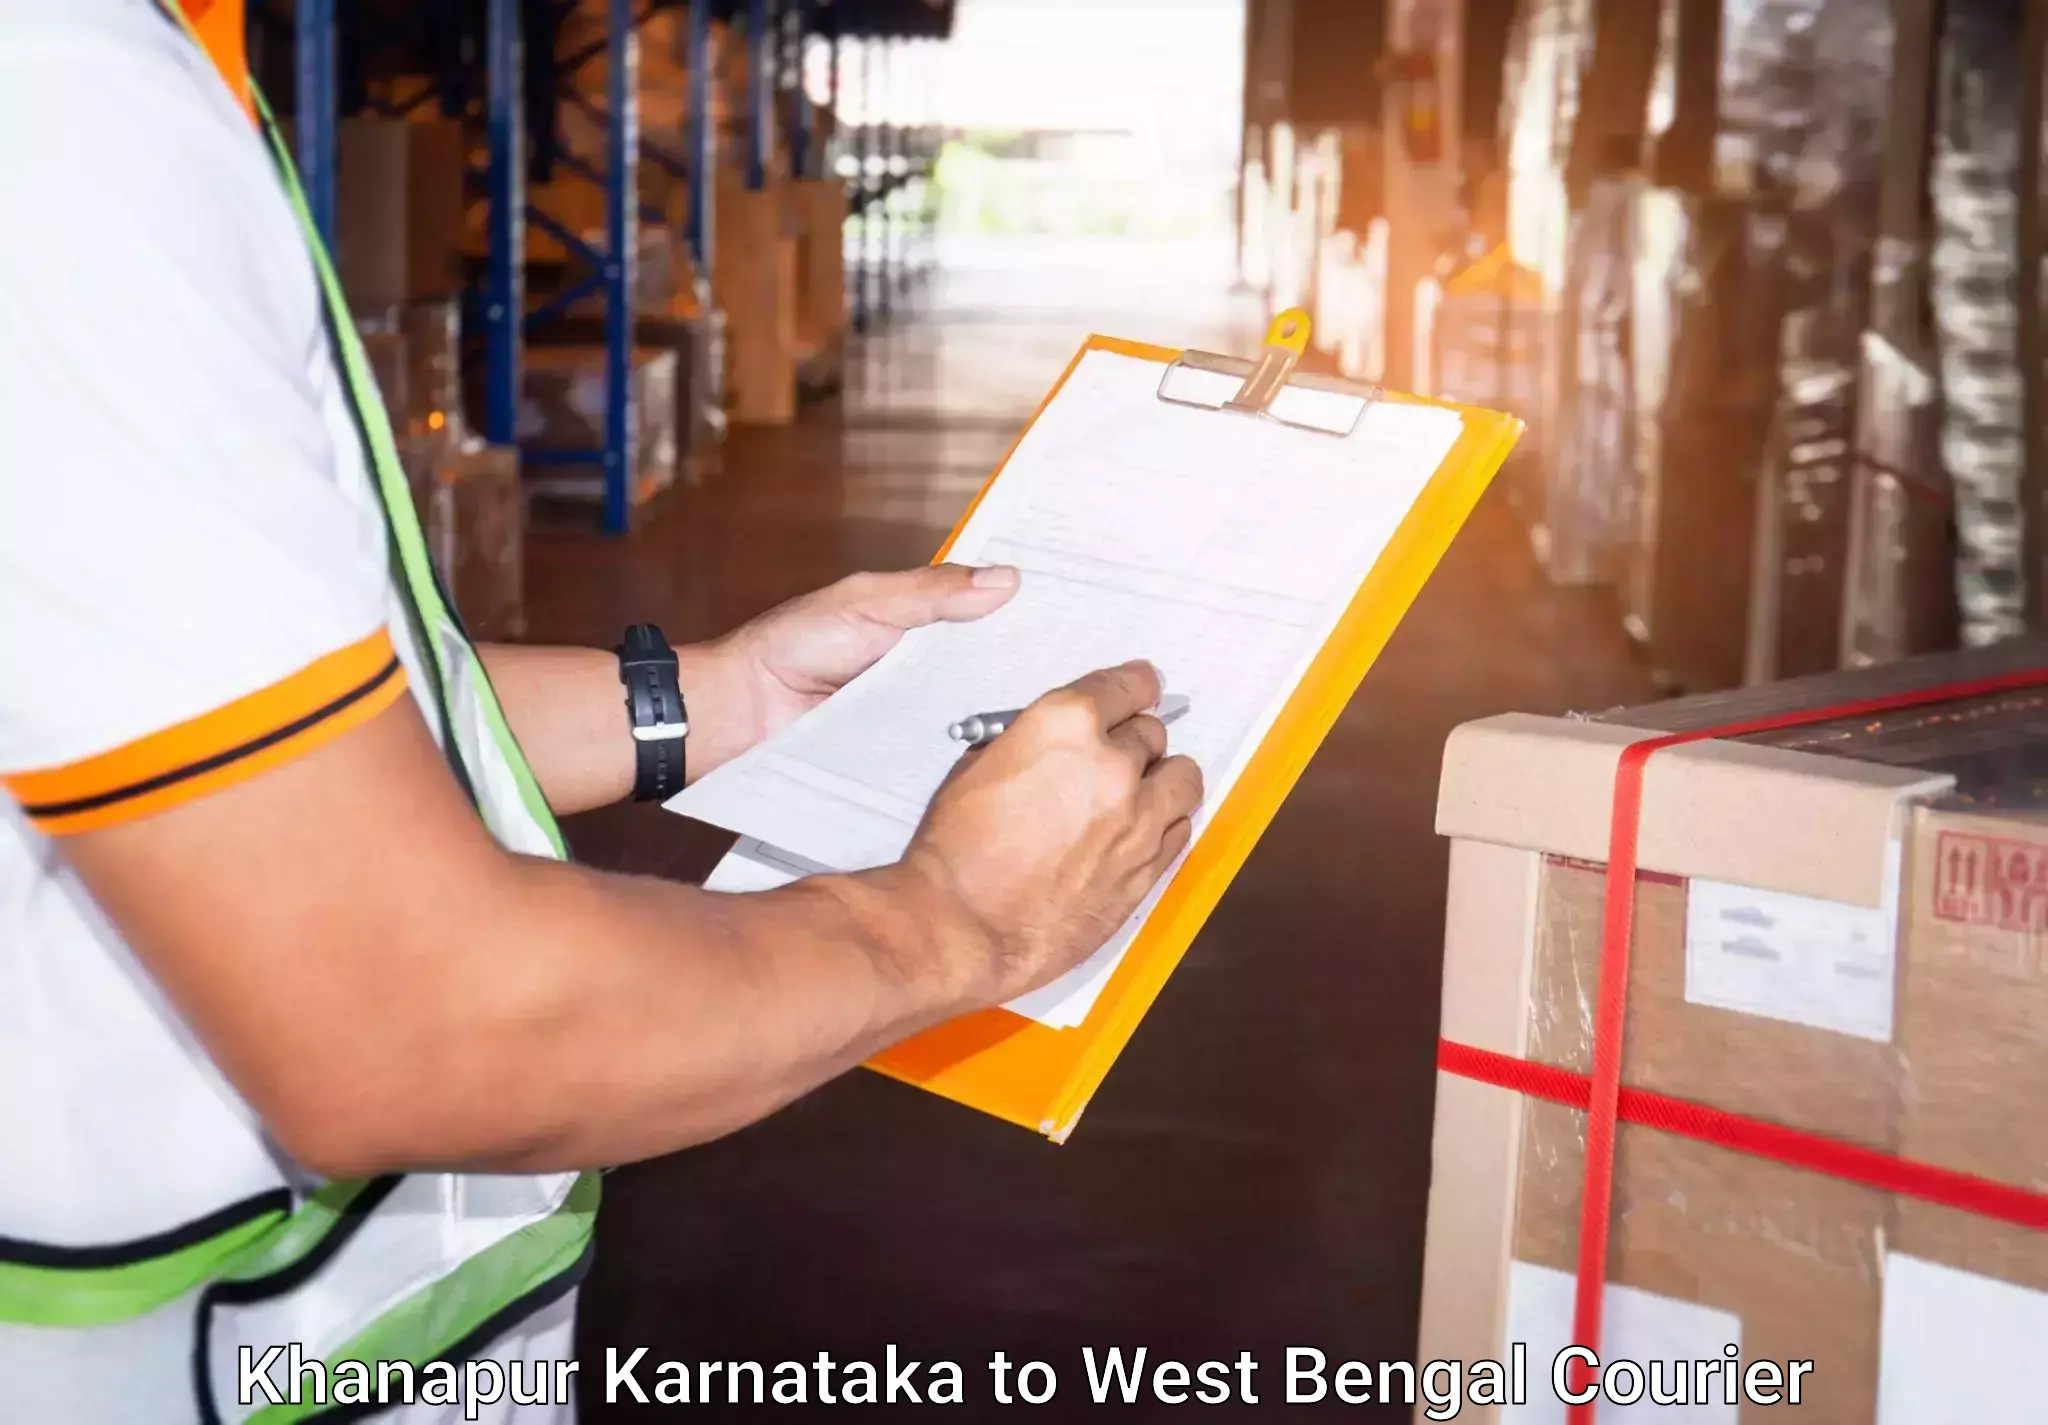 Baggage shipping experts Khanapur Karnataka to West Bengal